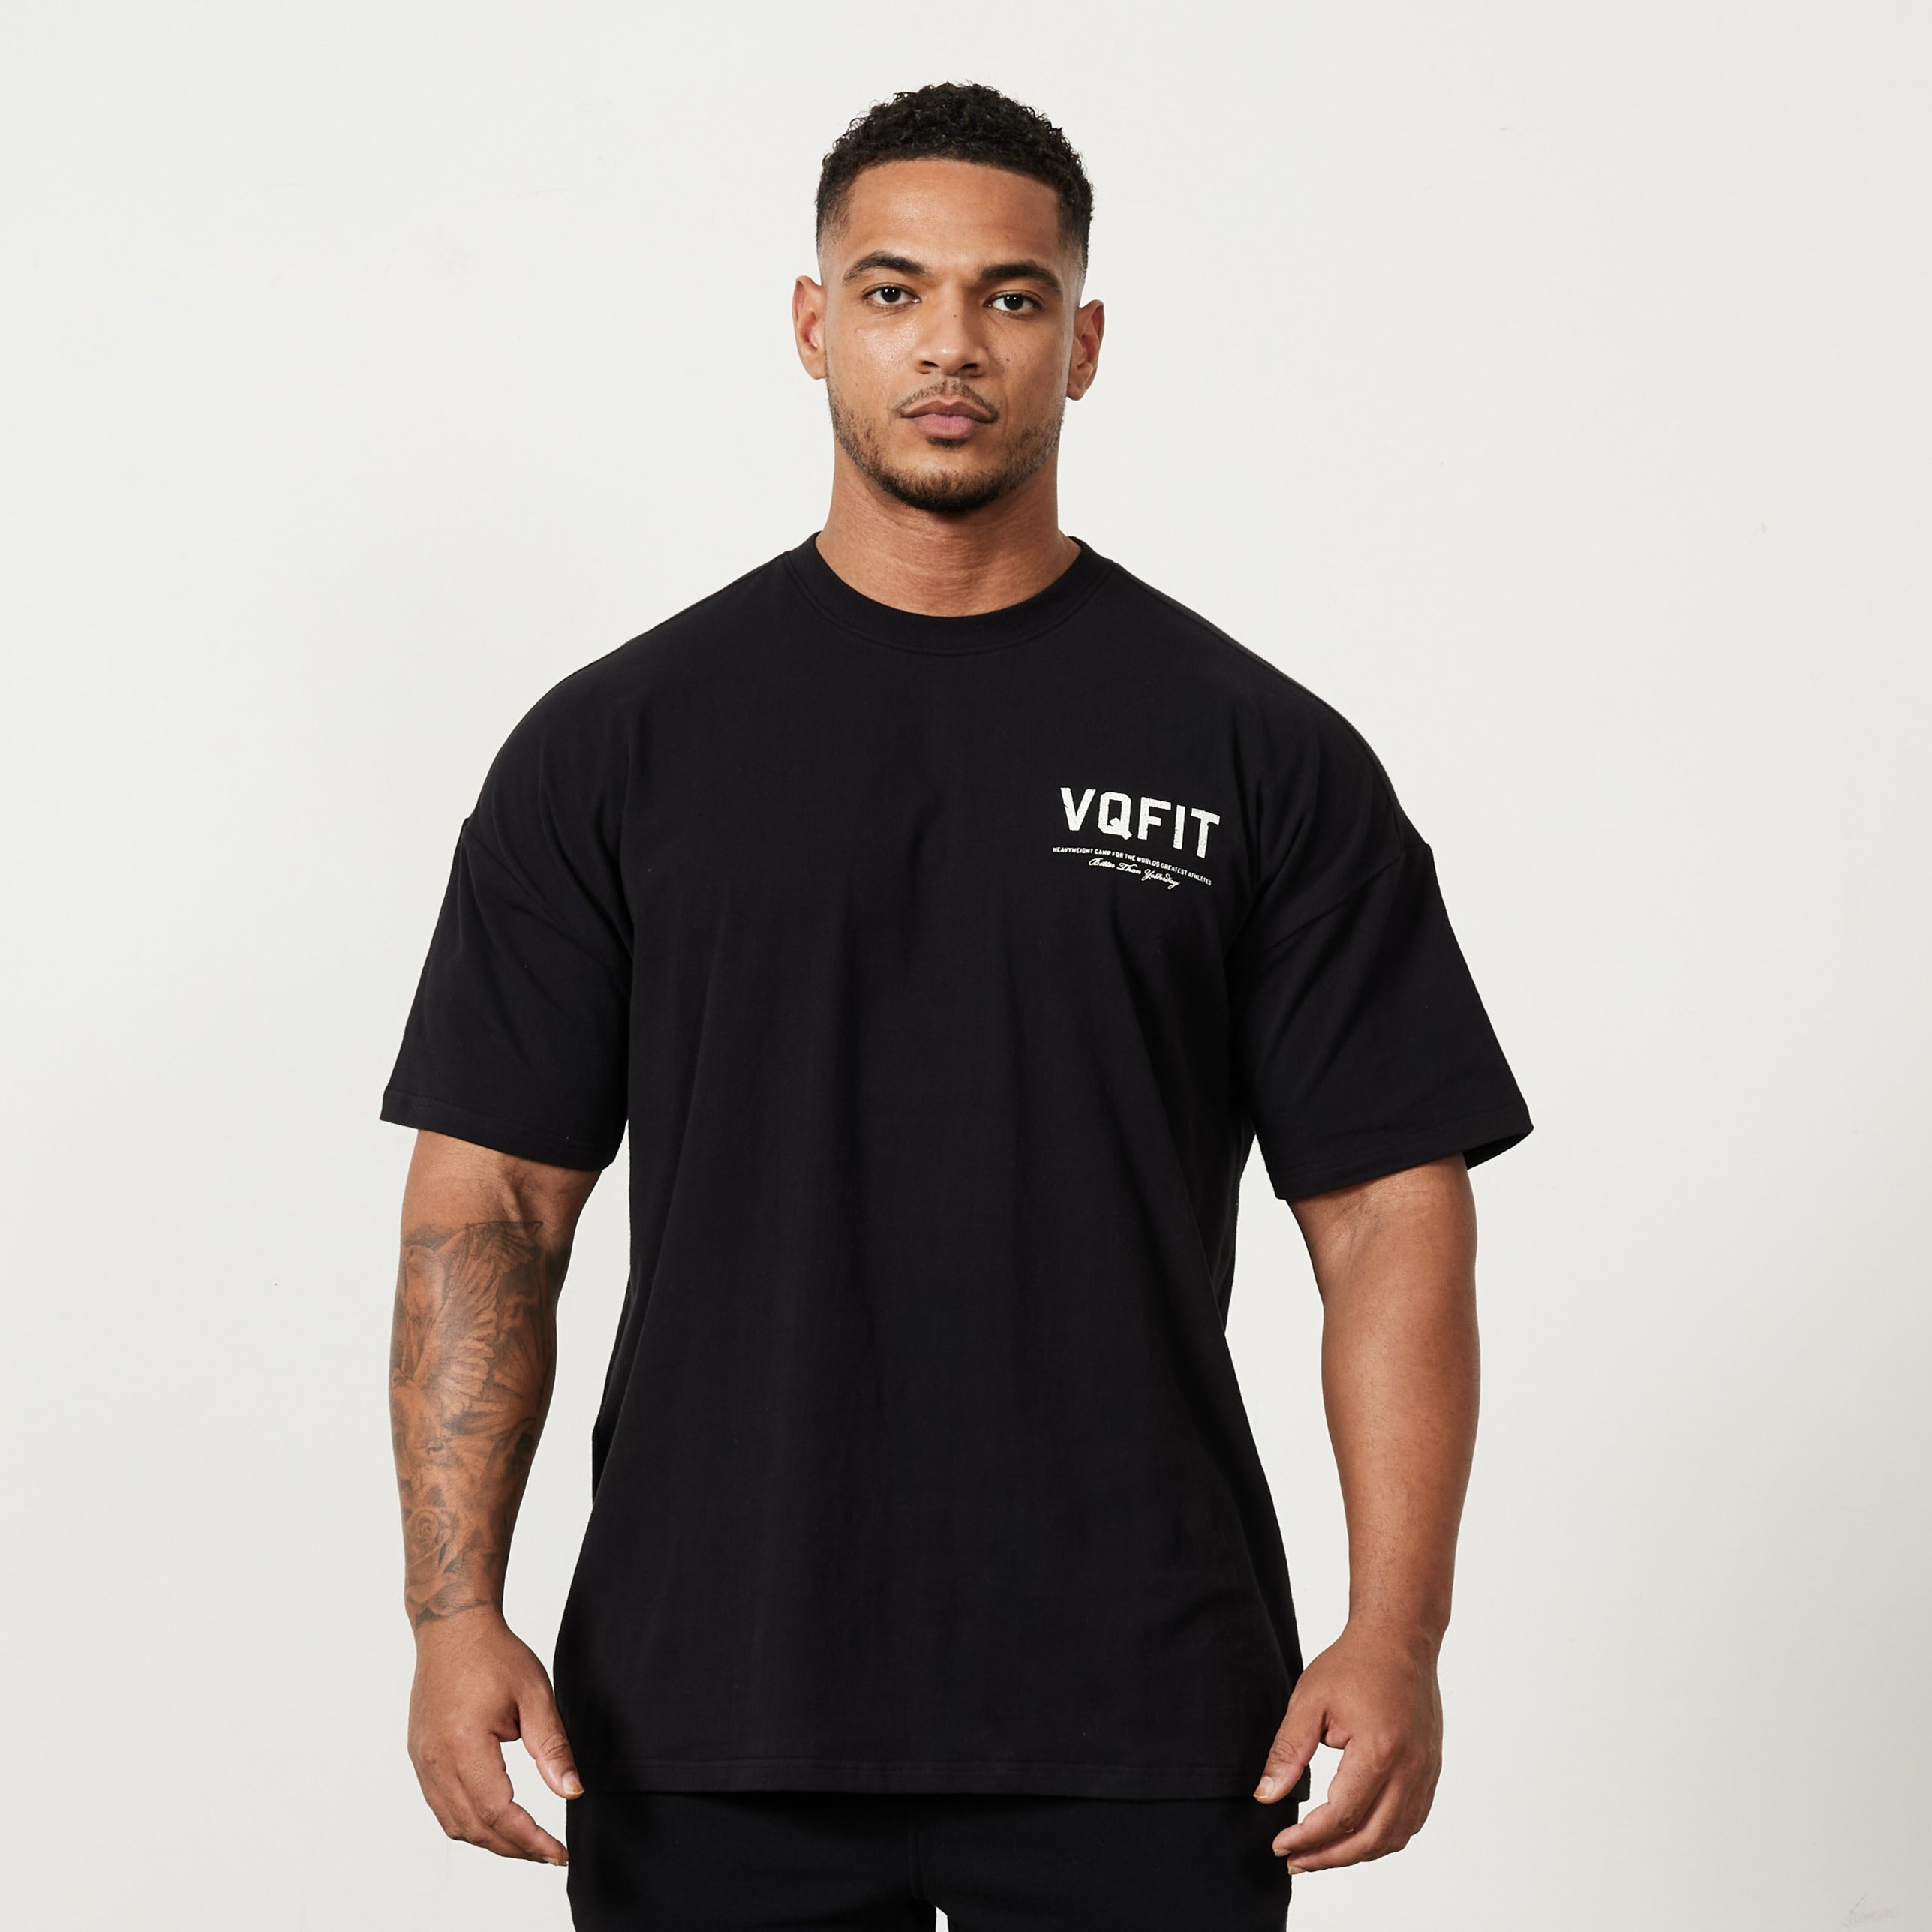 Vanquish VQFIT Distressed Print Black Oversized T Shirt